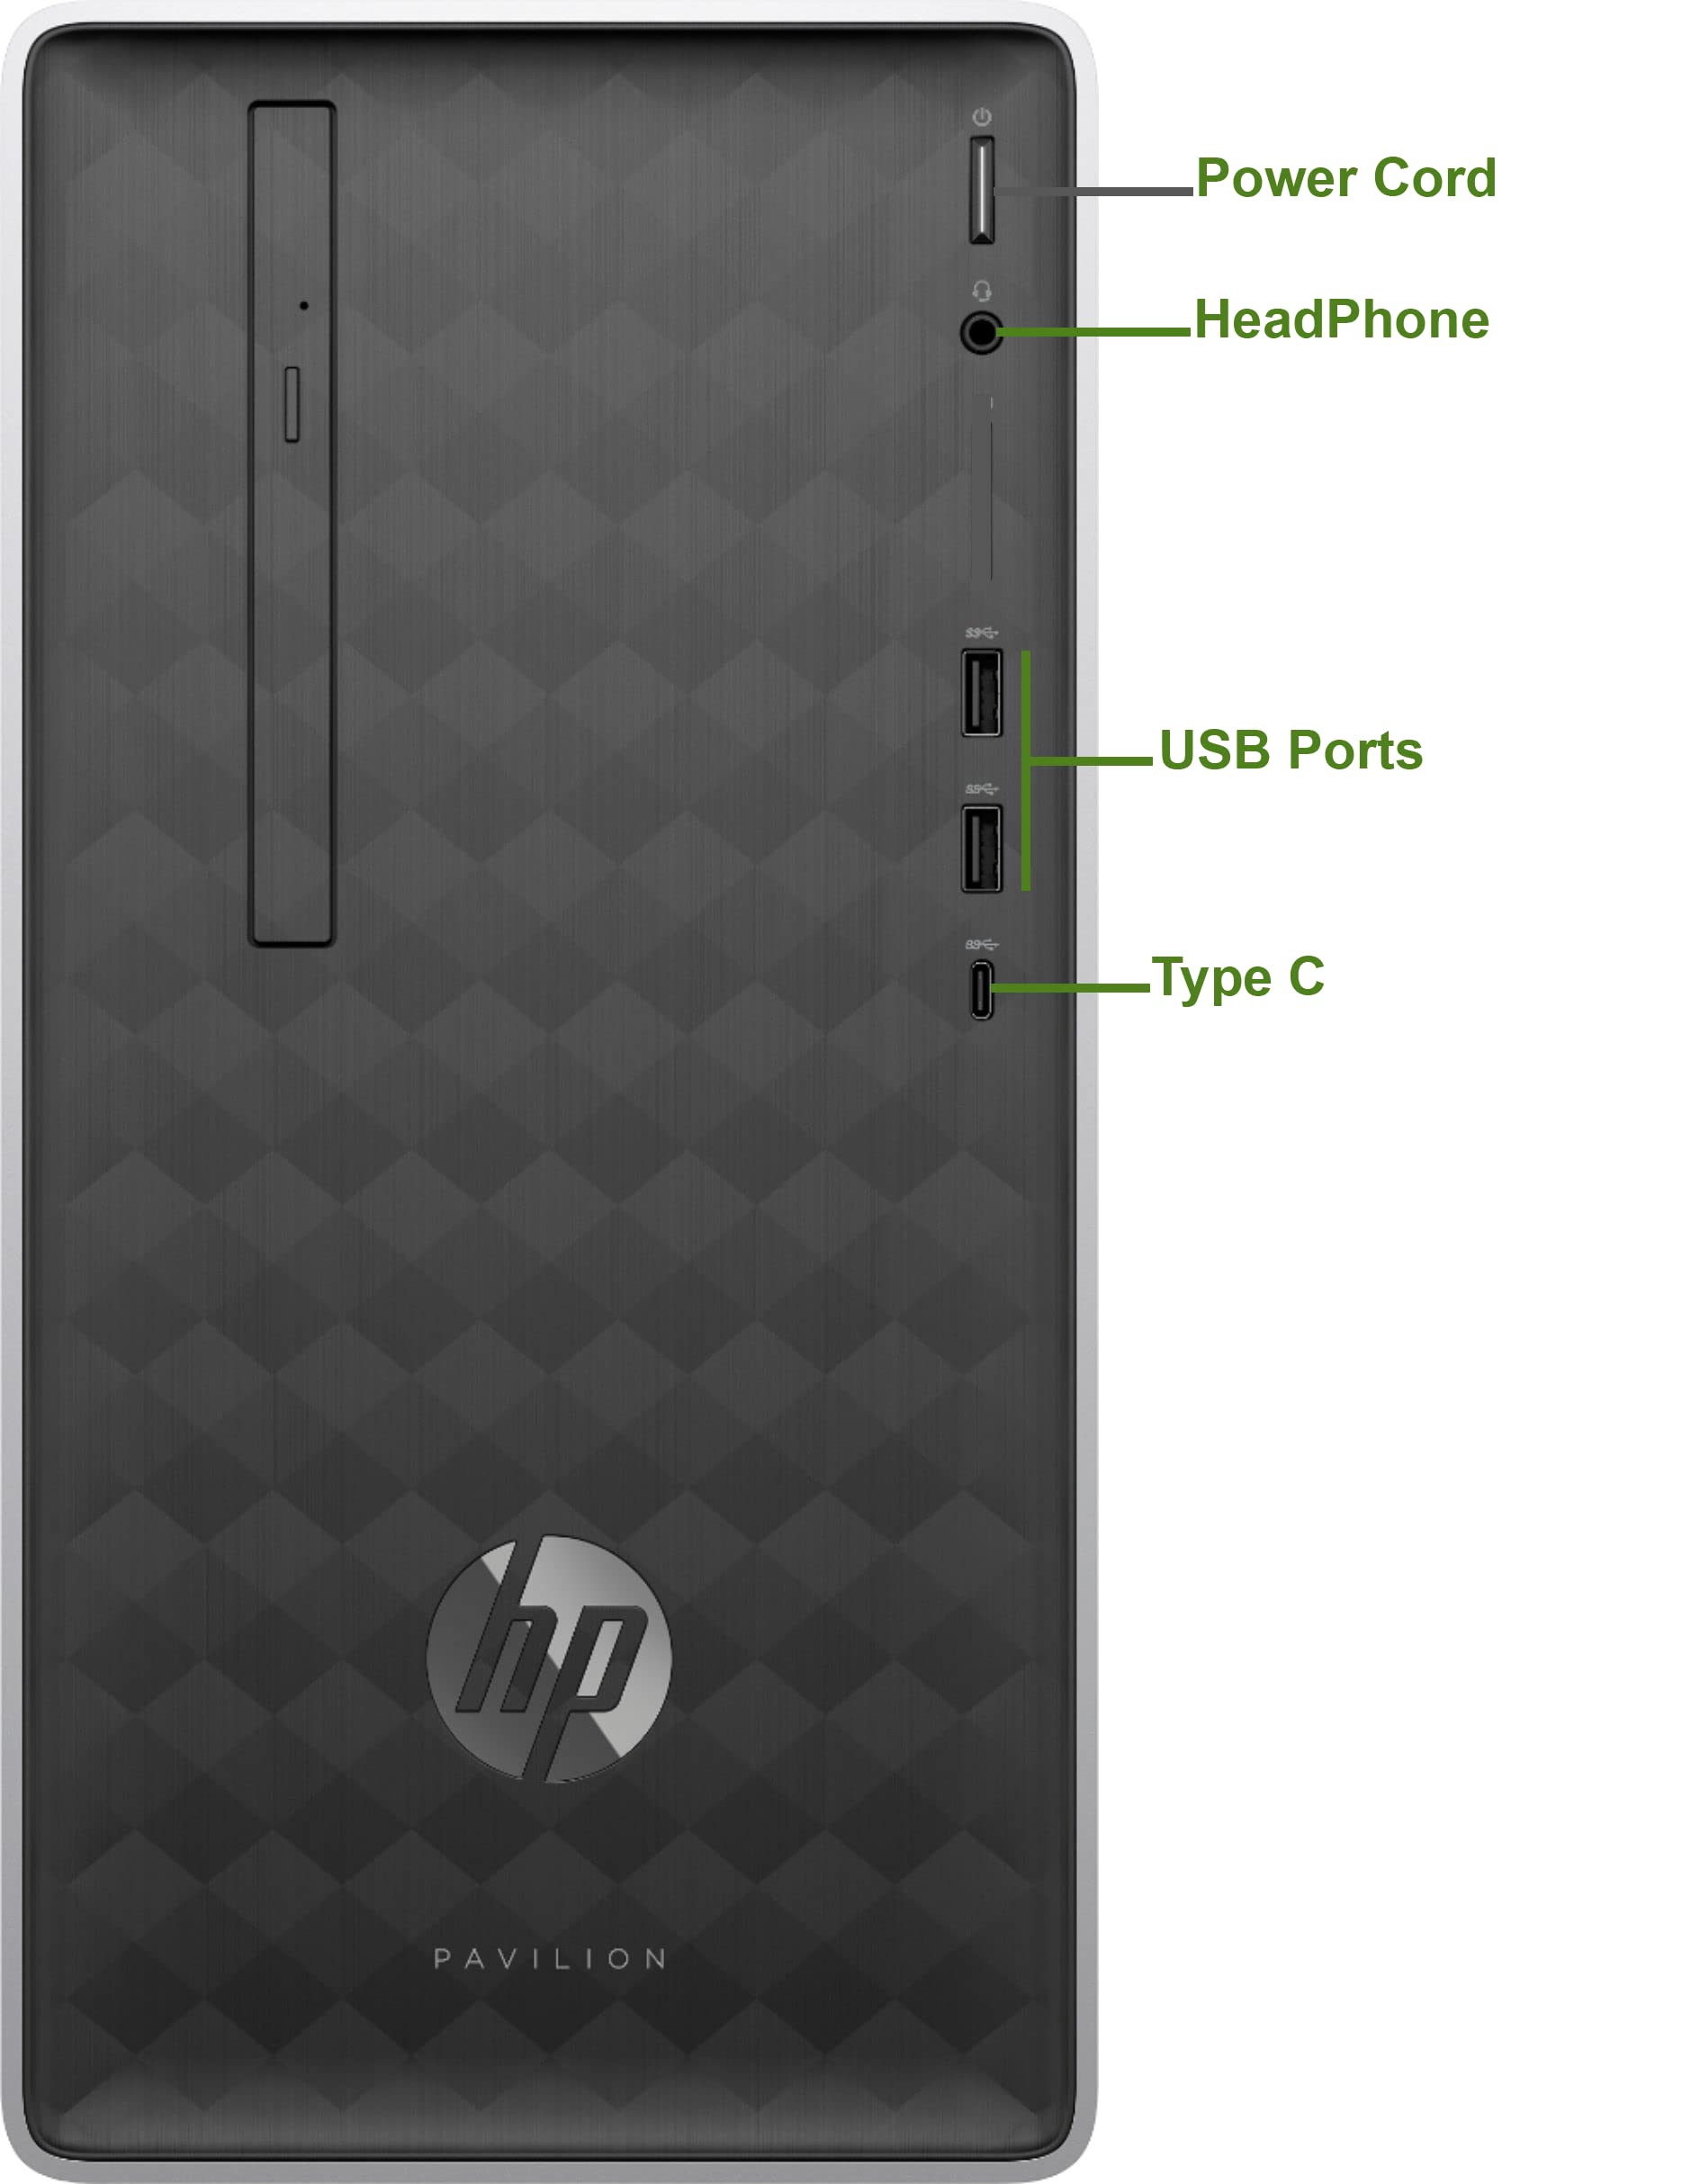 HP 590-P0069 Mini Tower Computer PC AMD Quad-Core A10-9700 Processor, [ 8GB Ram 2TB Hard Drive ] Wireless Keybaord and Mouse, Windows 10 (Renewed)